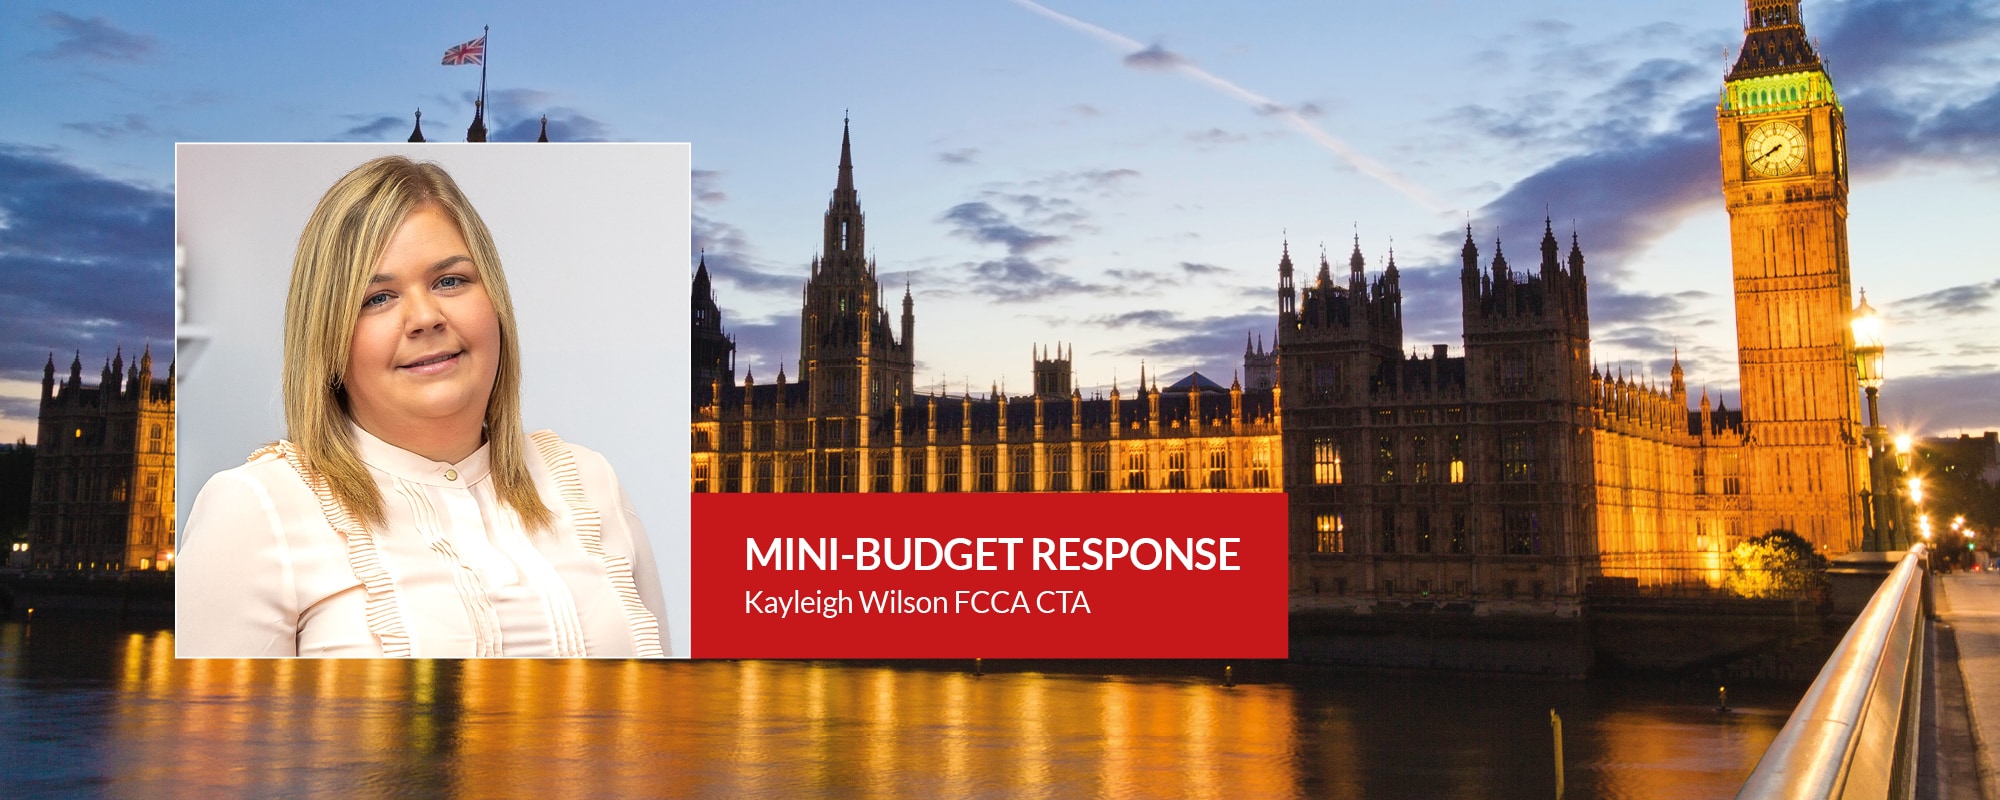 Mini Budget Response by Kayleigh Wilson